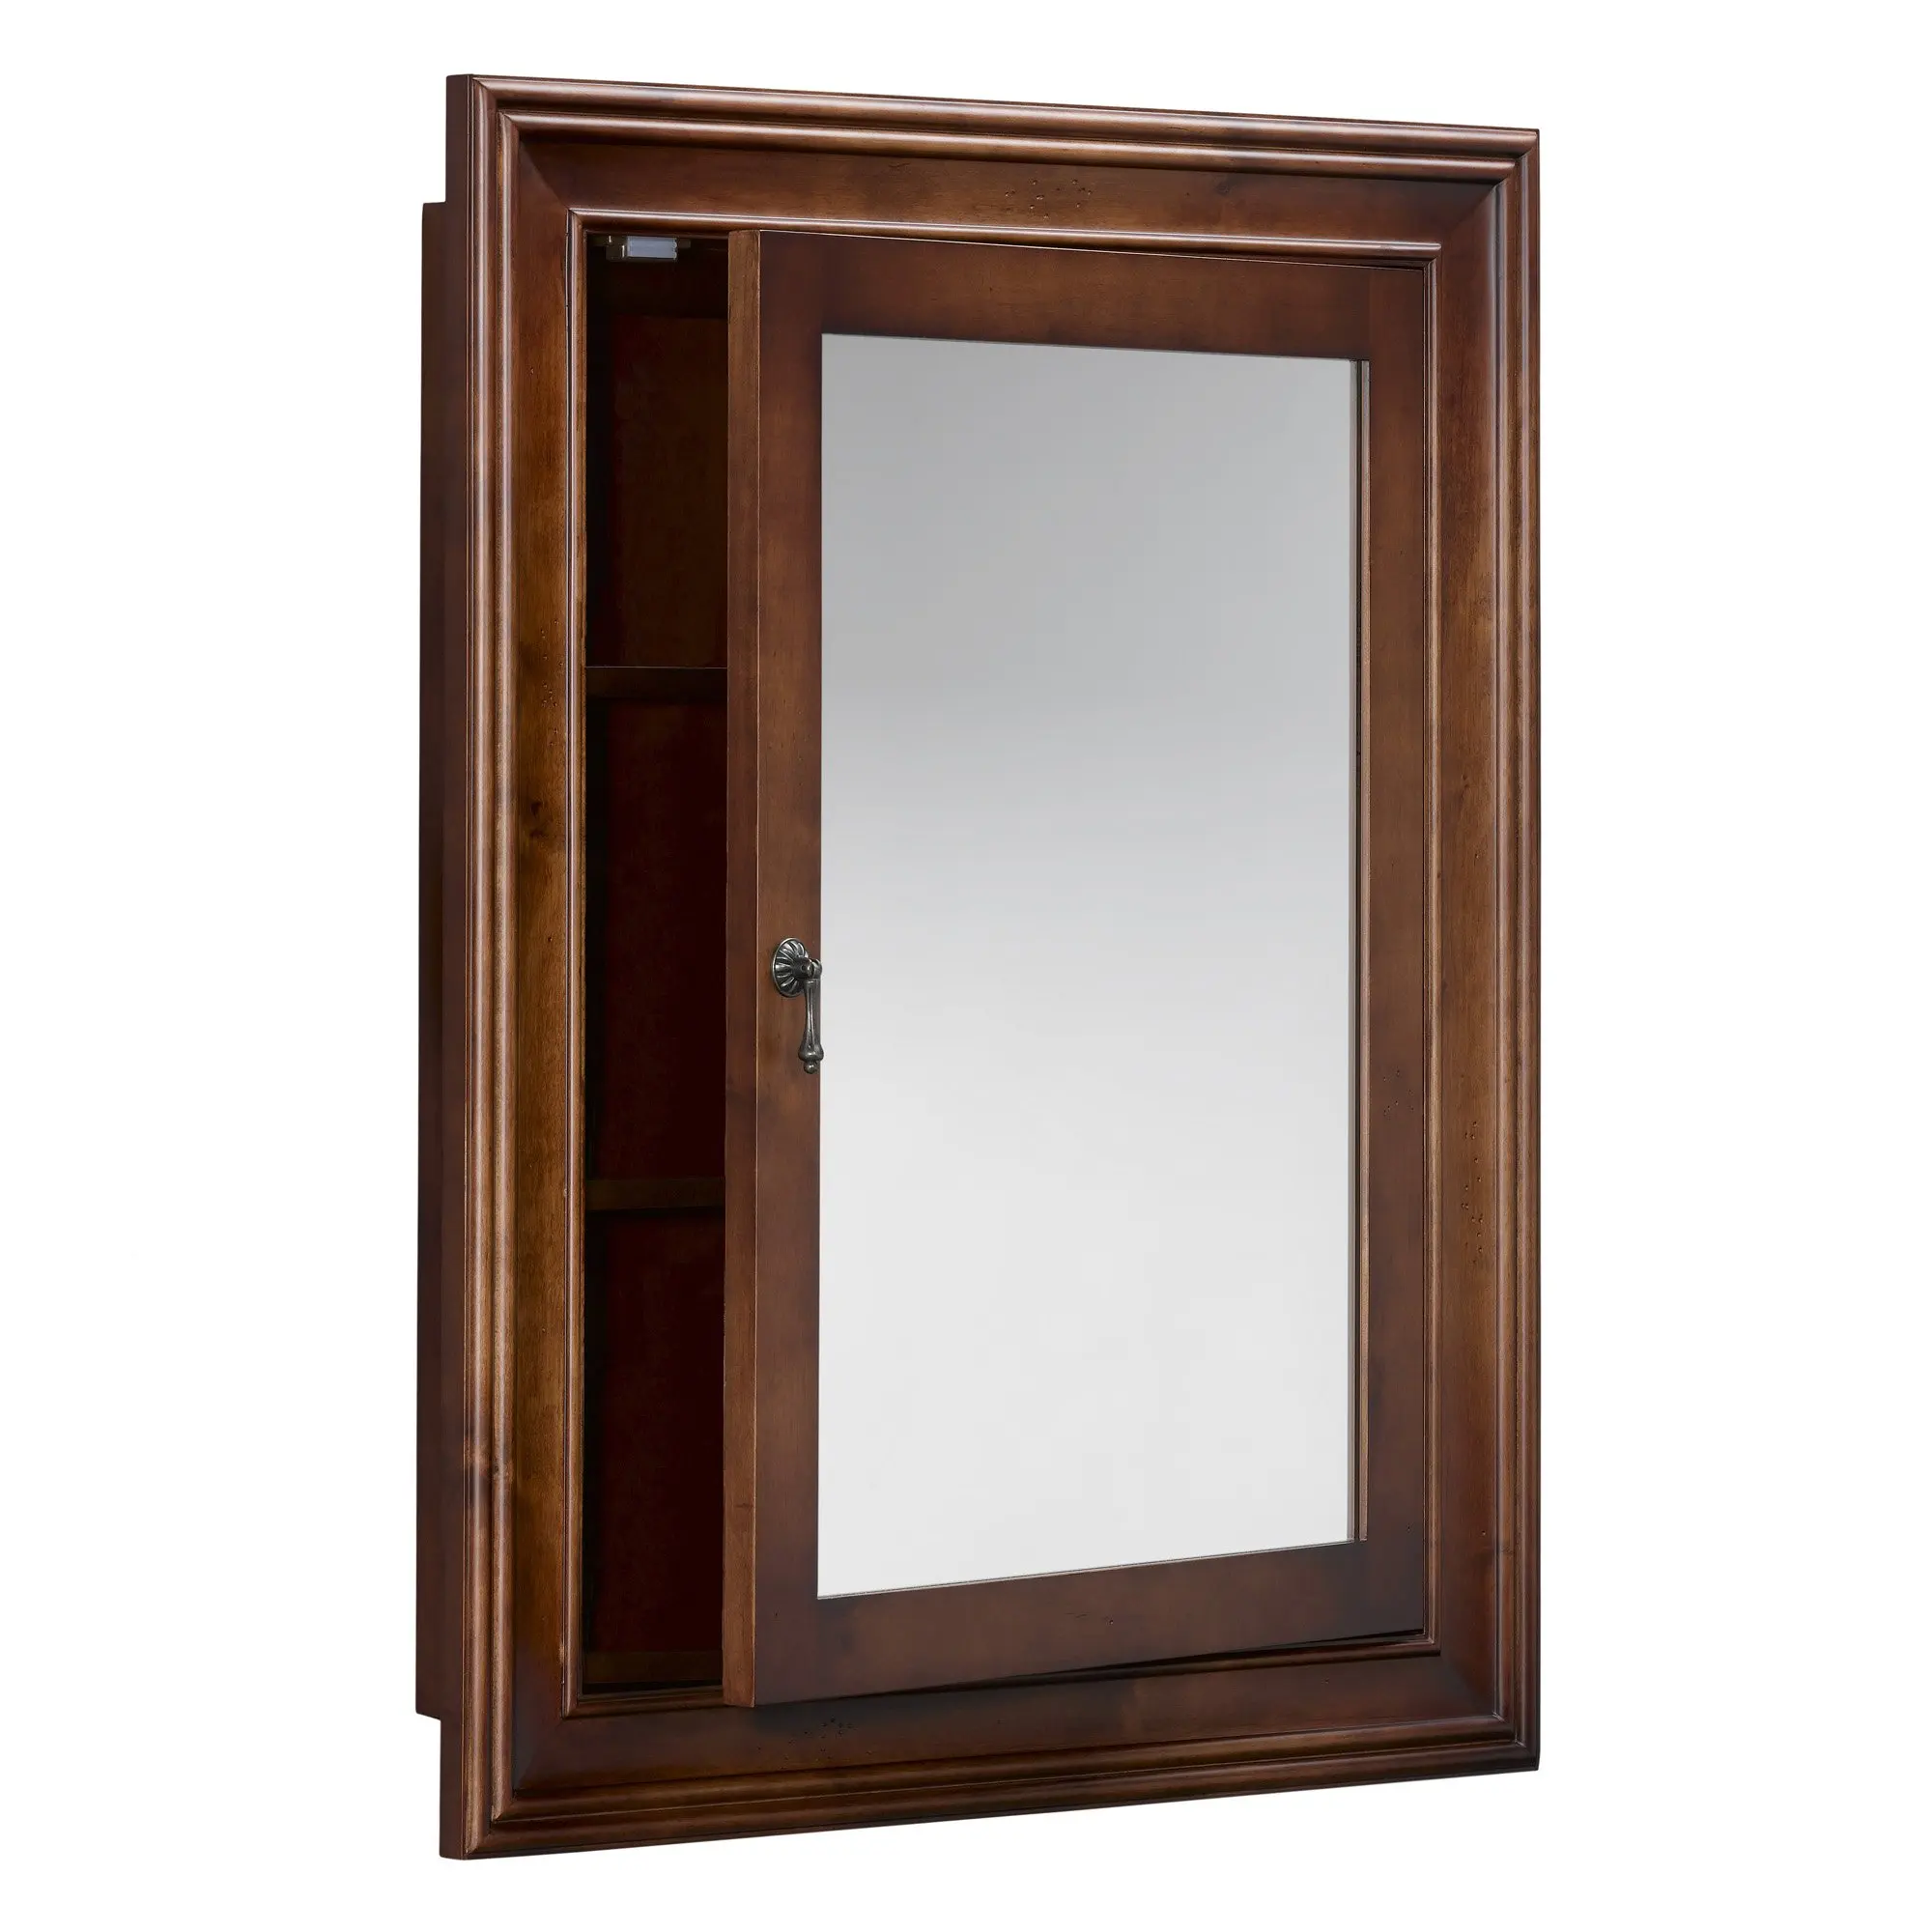 Buy European Solid Wood Bathroom Cabinet Pvc Bathroom Cabinet